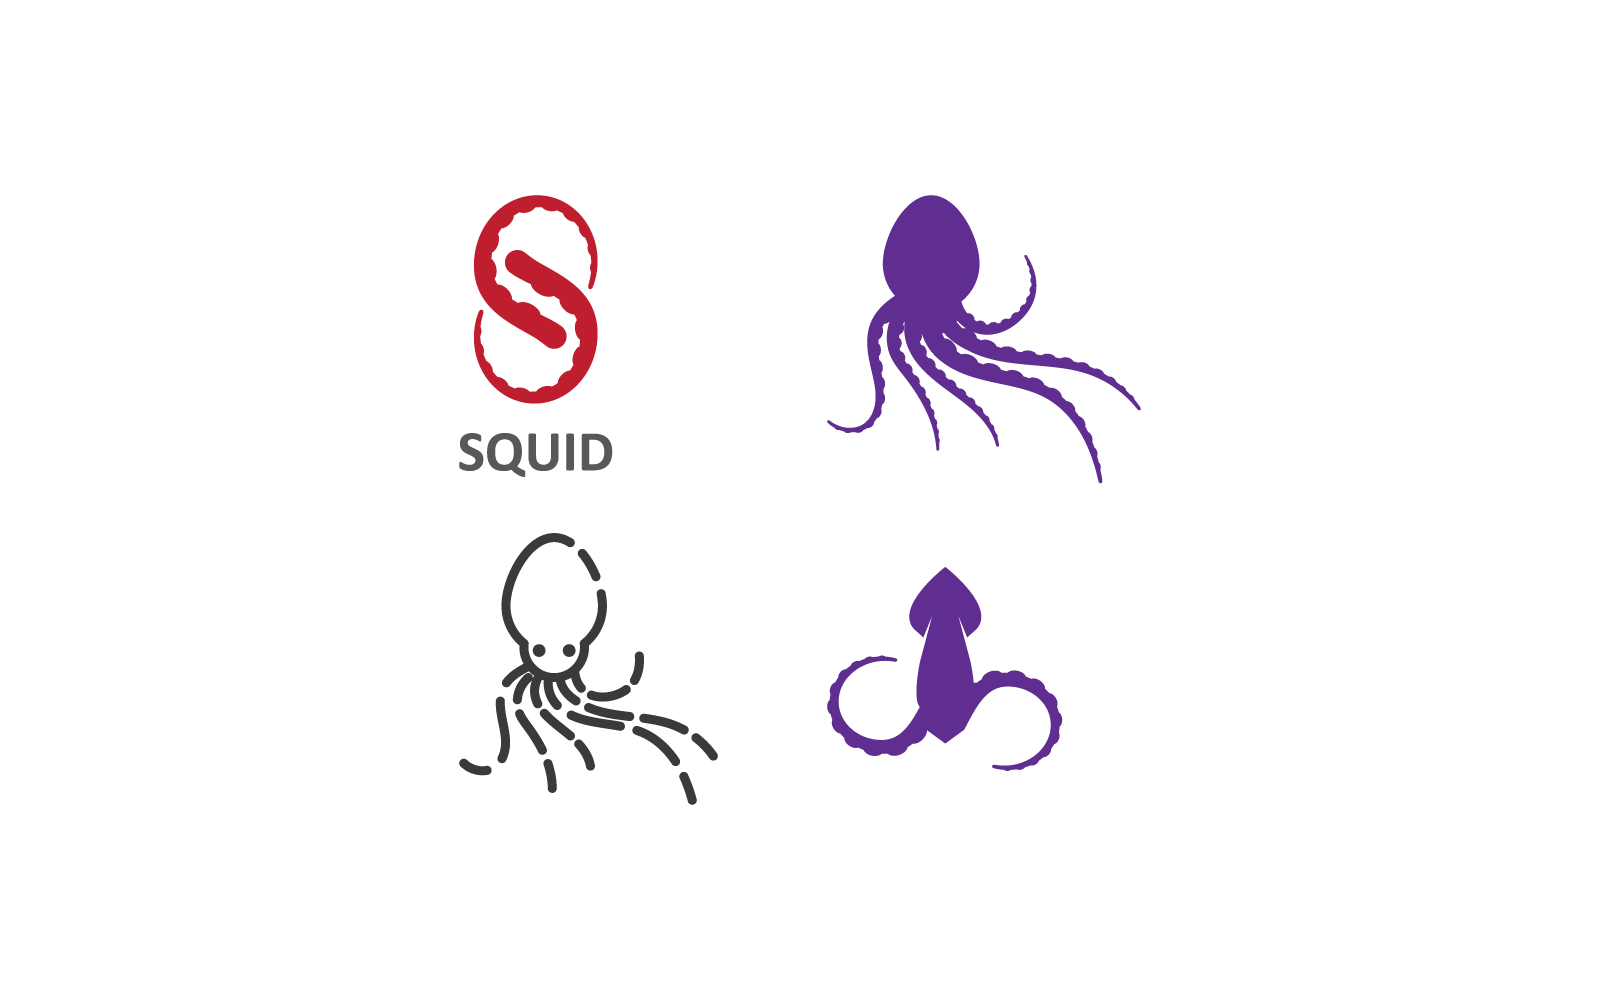 Squid fish logo icon vector design template